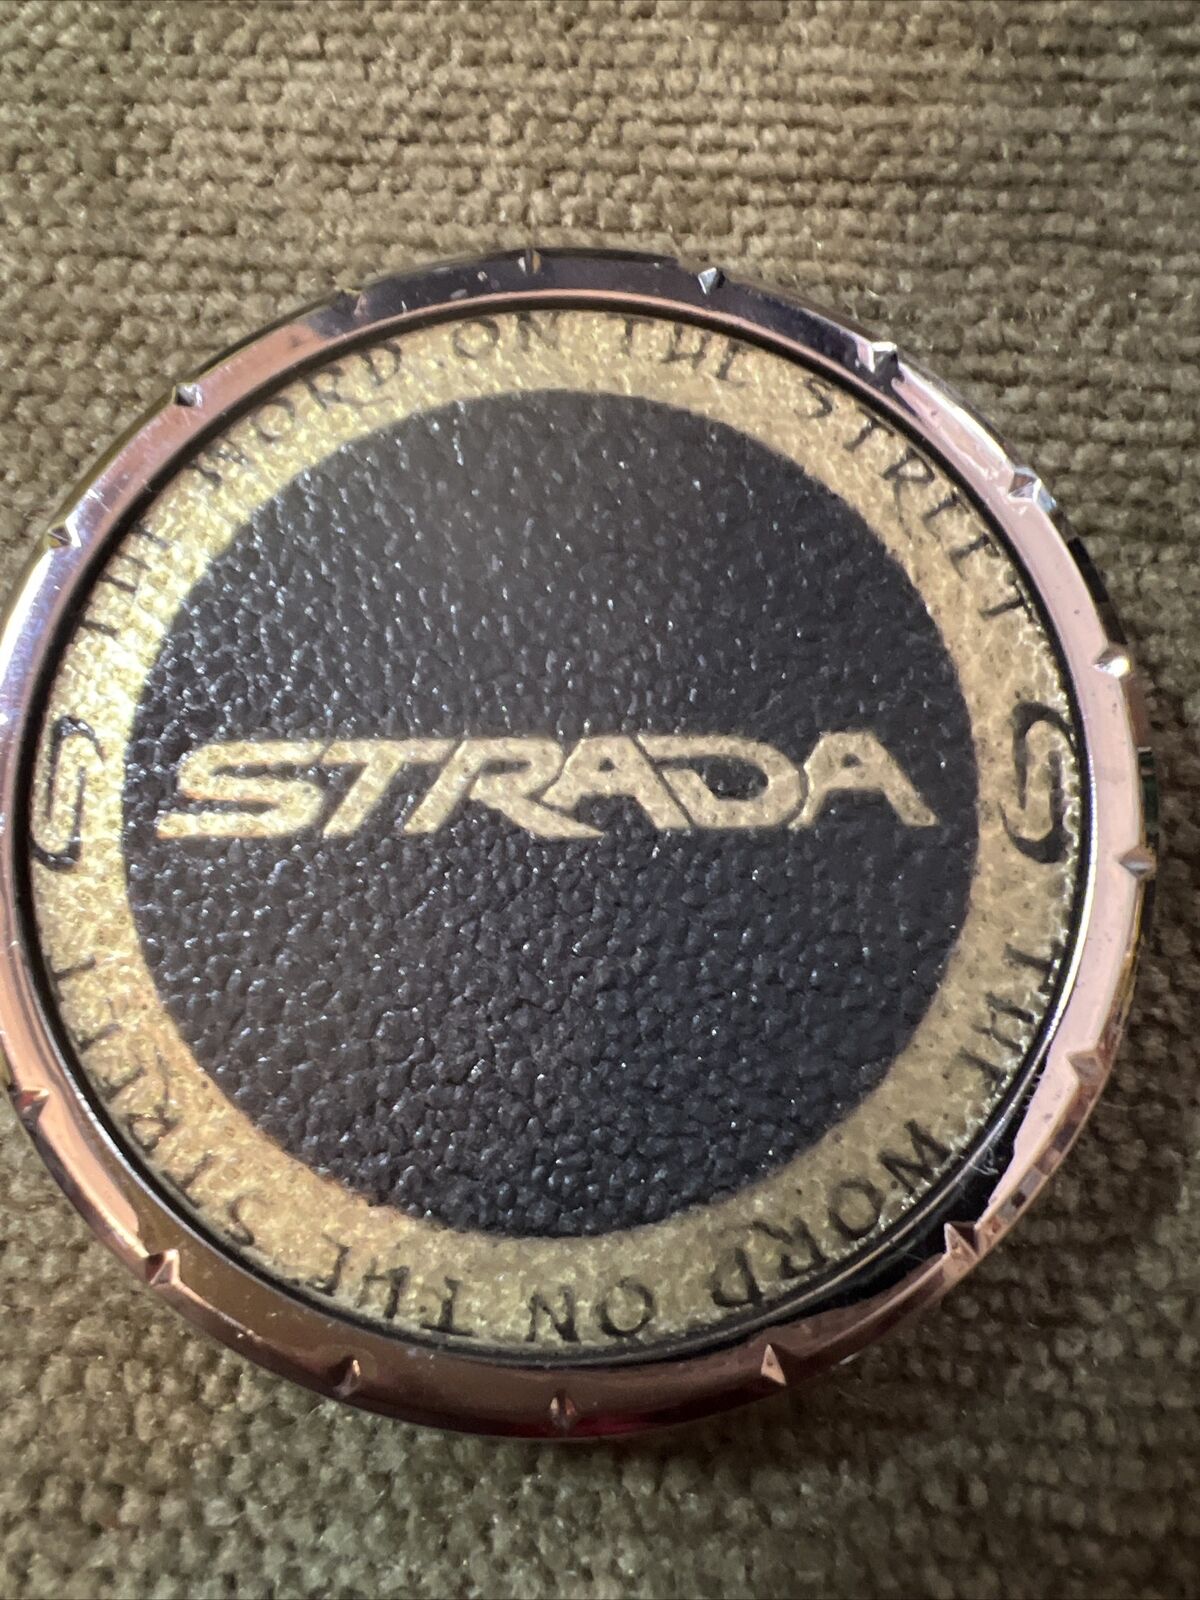 Strada Word the Street CHROME Wheel Rim Hub Cover Center Cap 81192085F-1